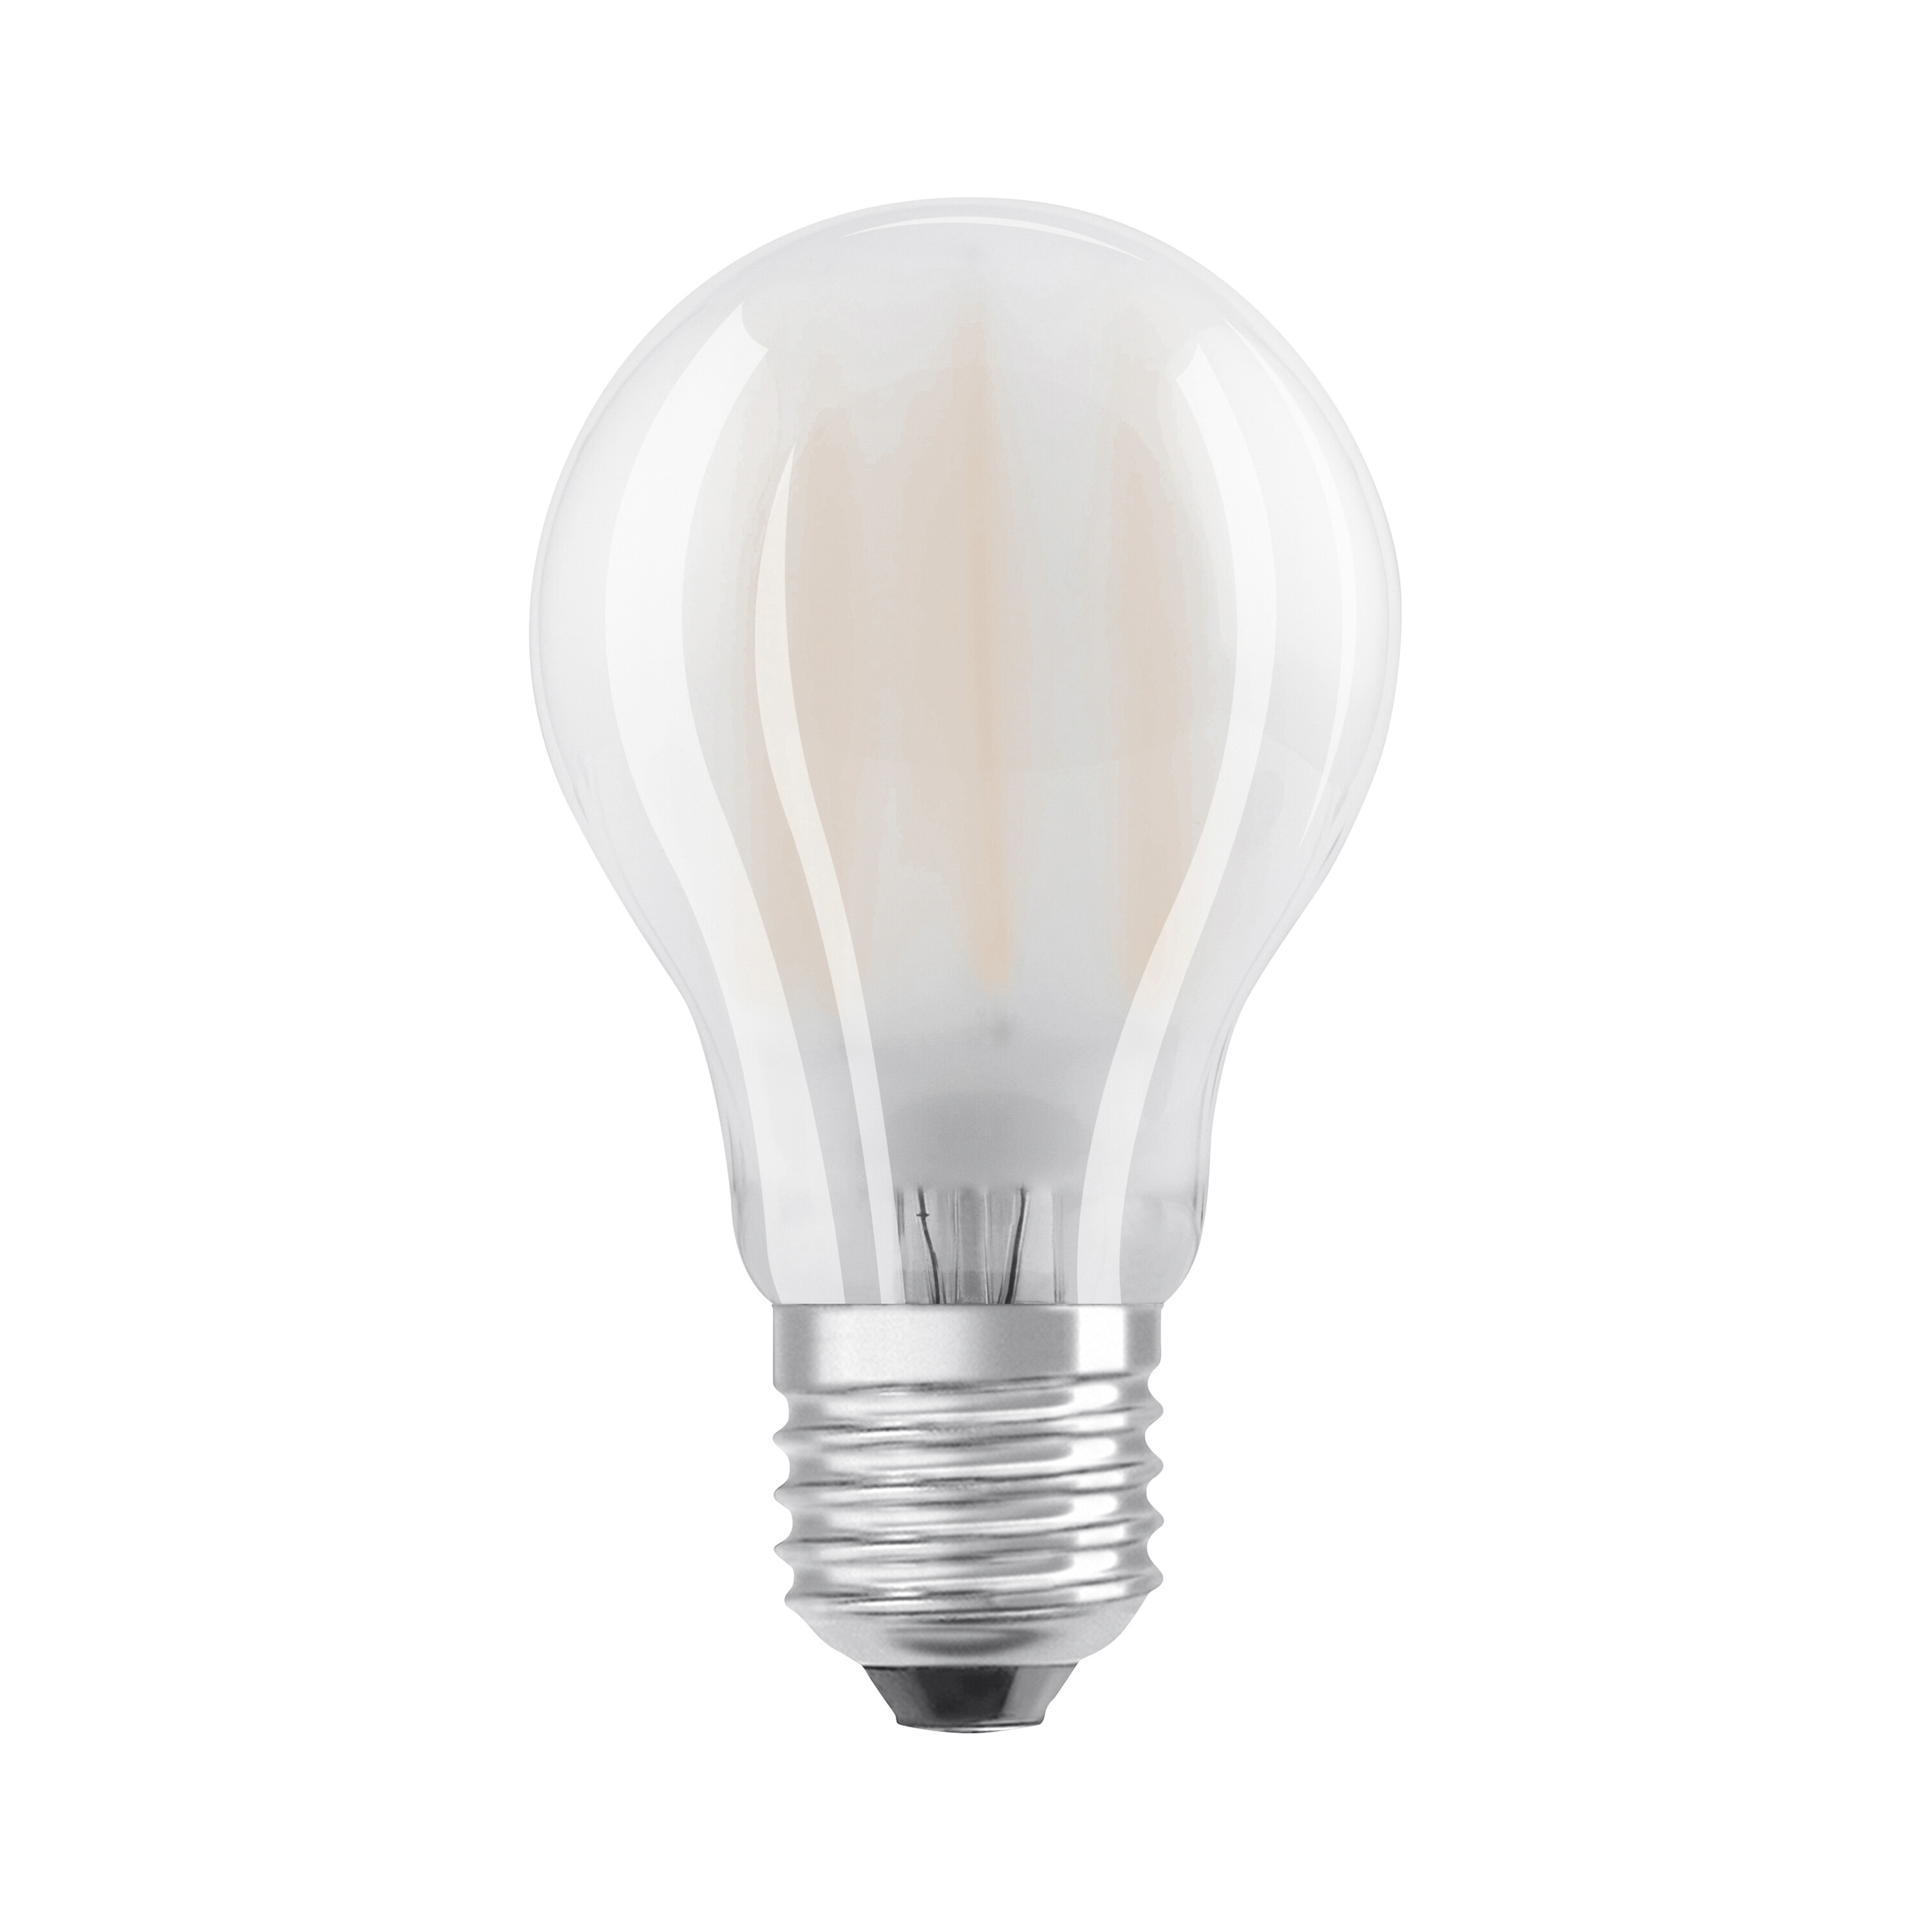 Filament Dimmable Classic LED LEDVANCE Lumen Warmweiß 1055 SMART+ Lampe